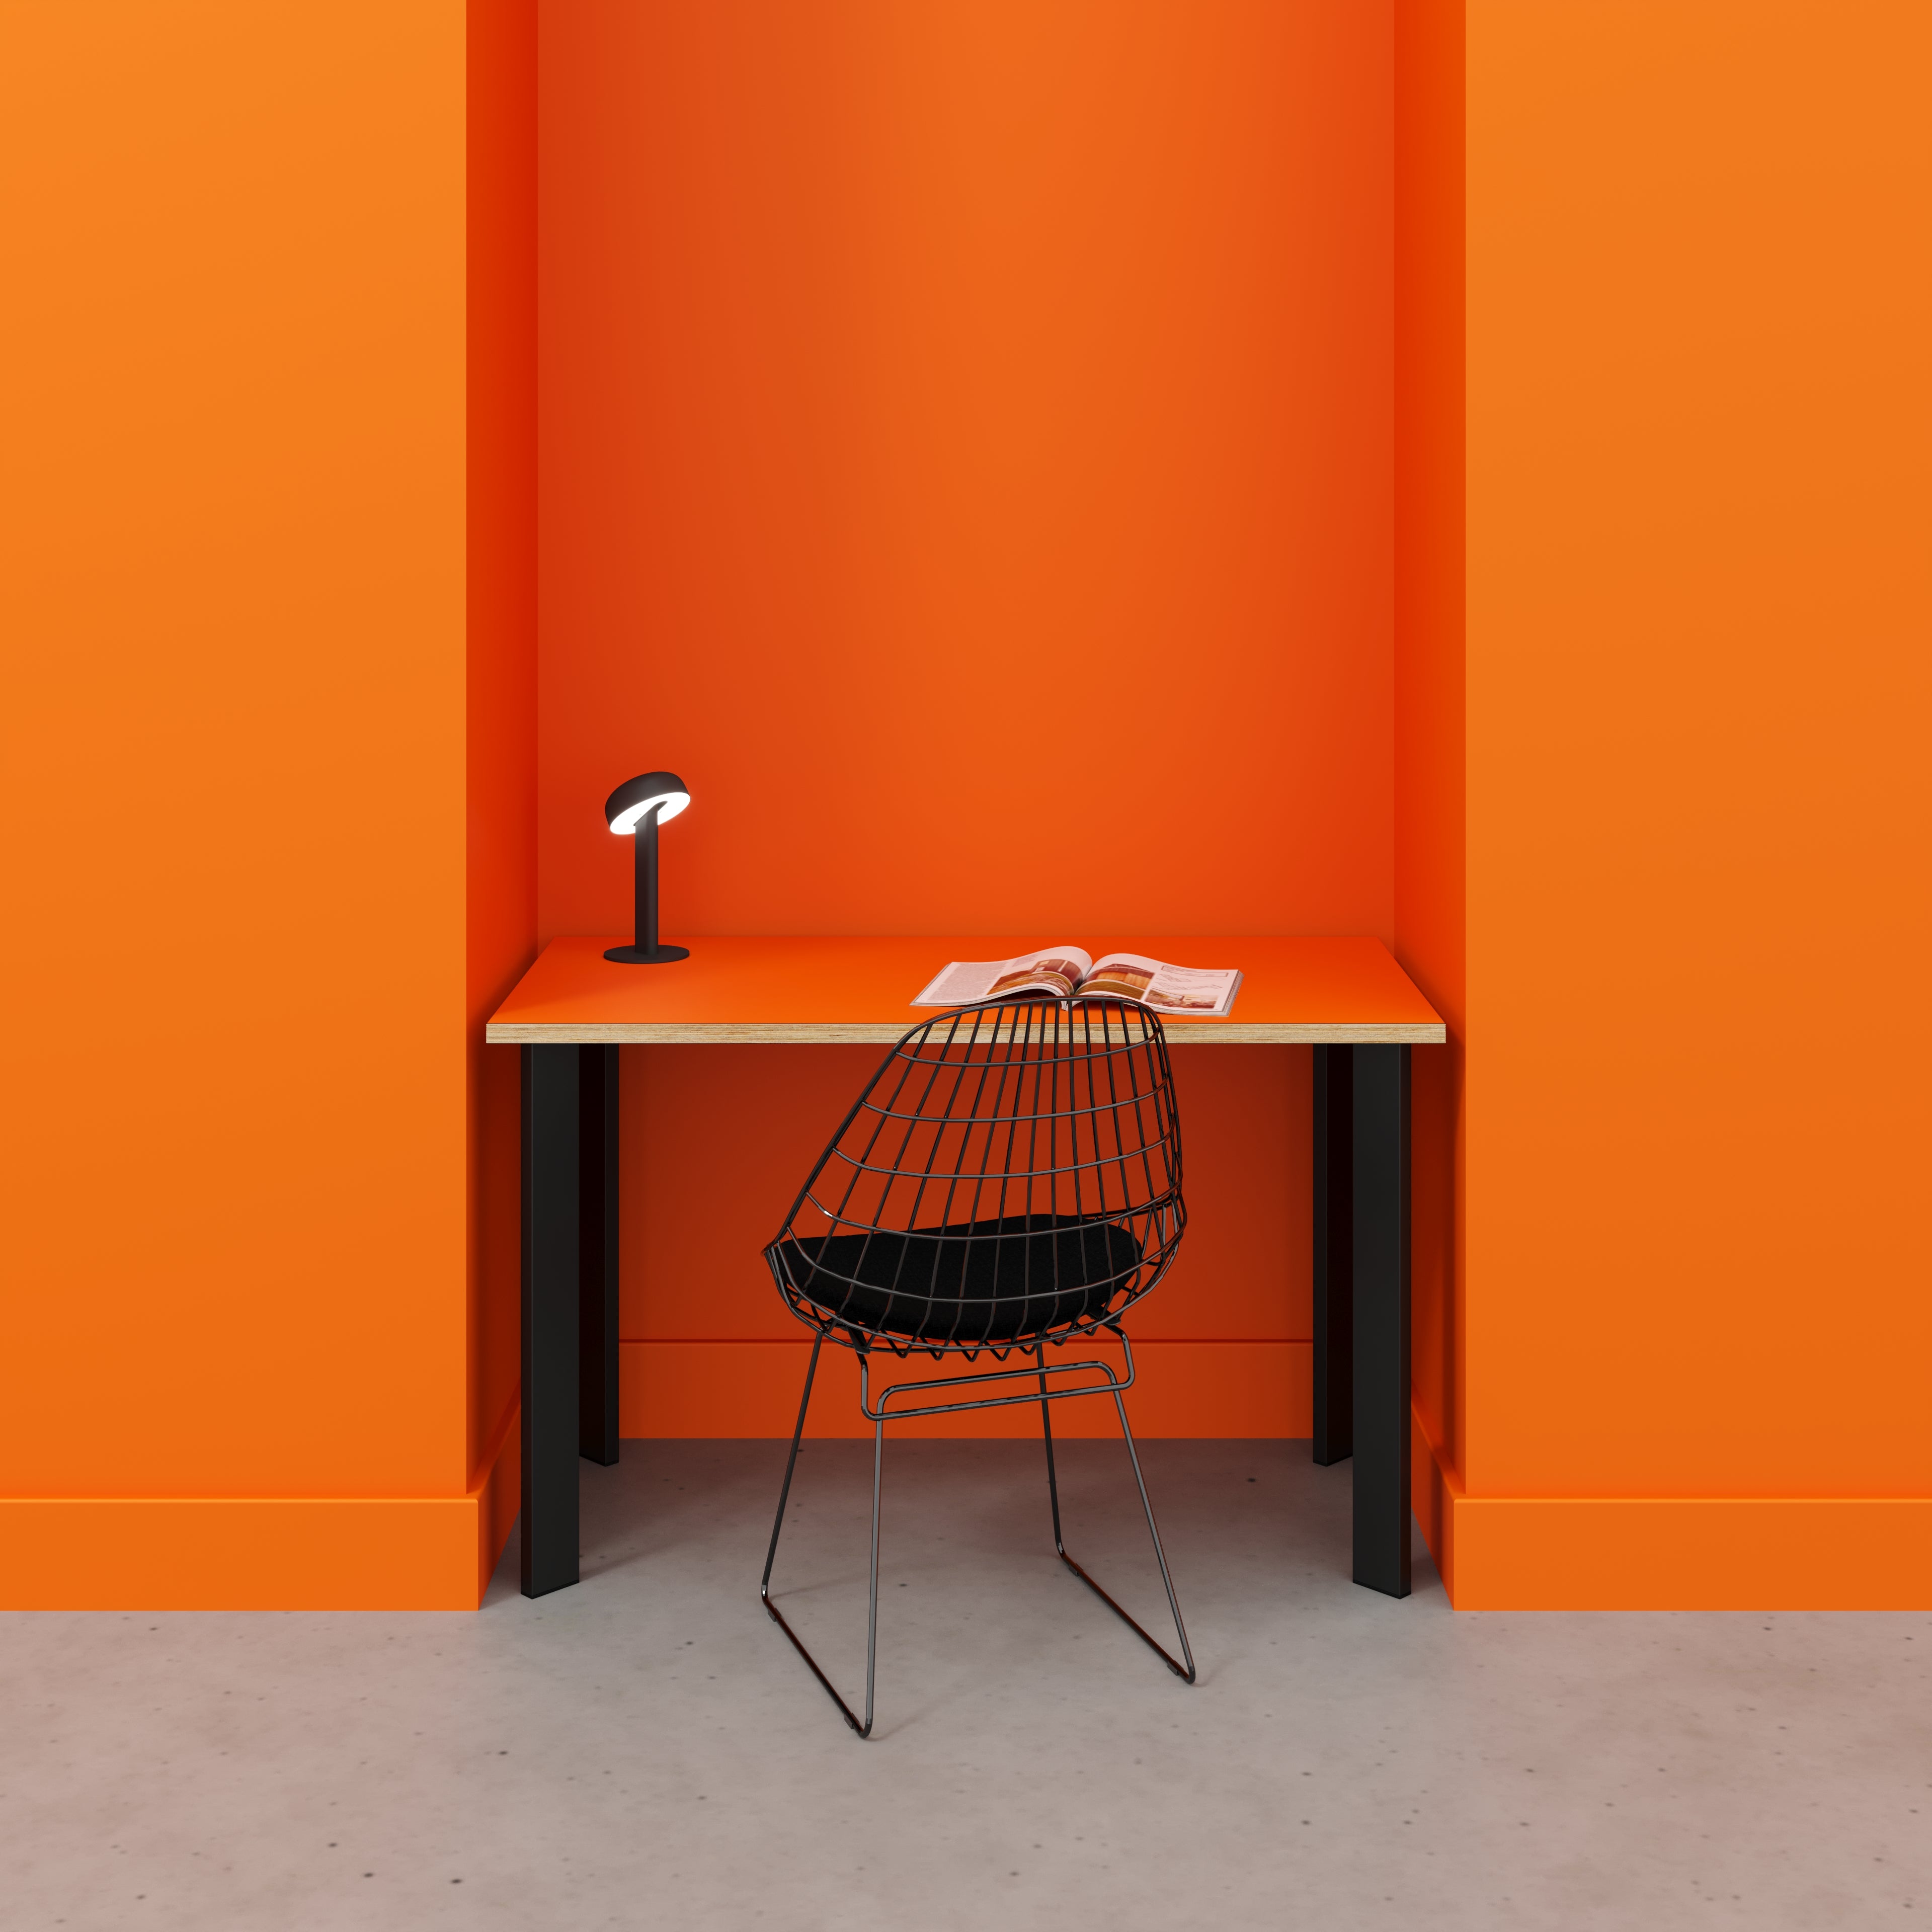 Desk with Black Rectangular Single Pin Legs - Formica Levante Orange - 1200(w) x 600(d) x 735(h)